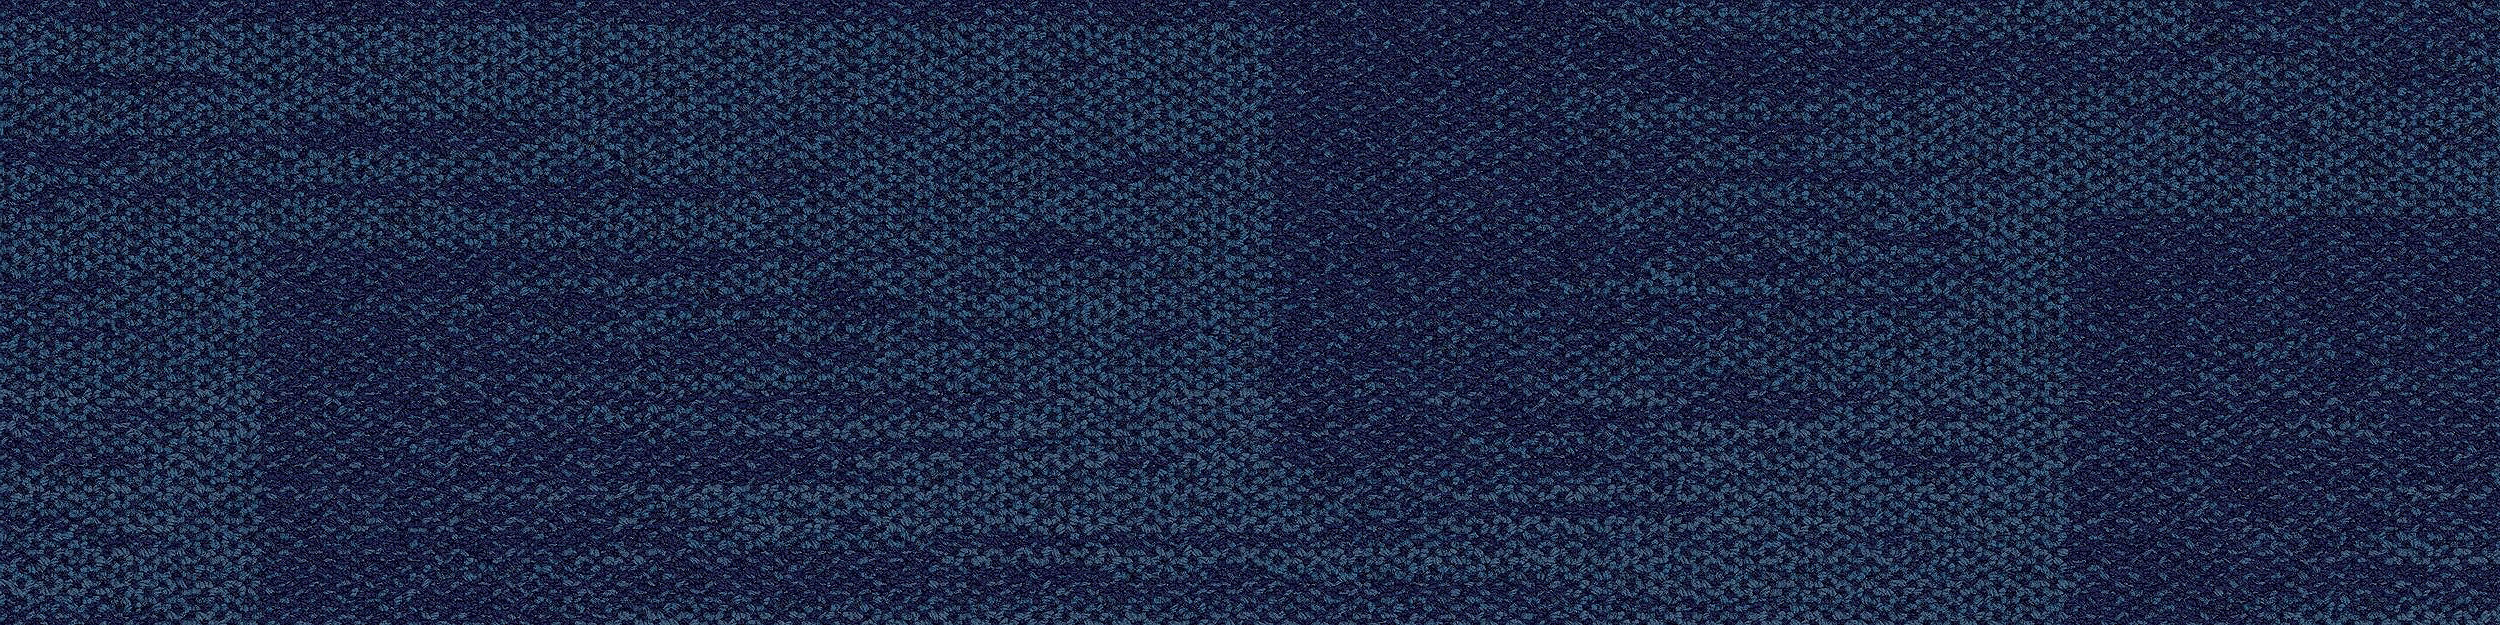 AE317 Carpet Tile In Azure image number 13